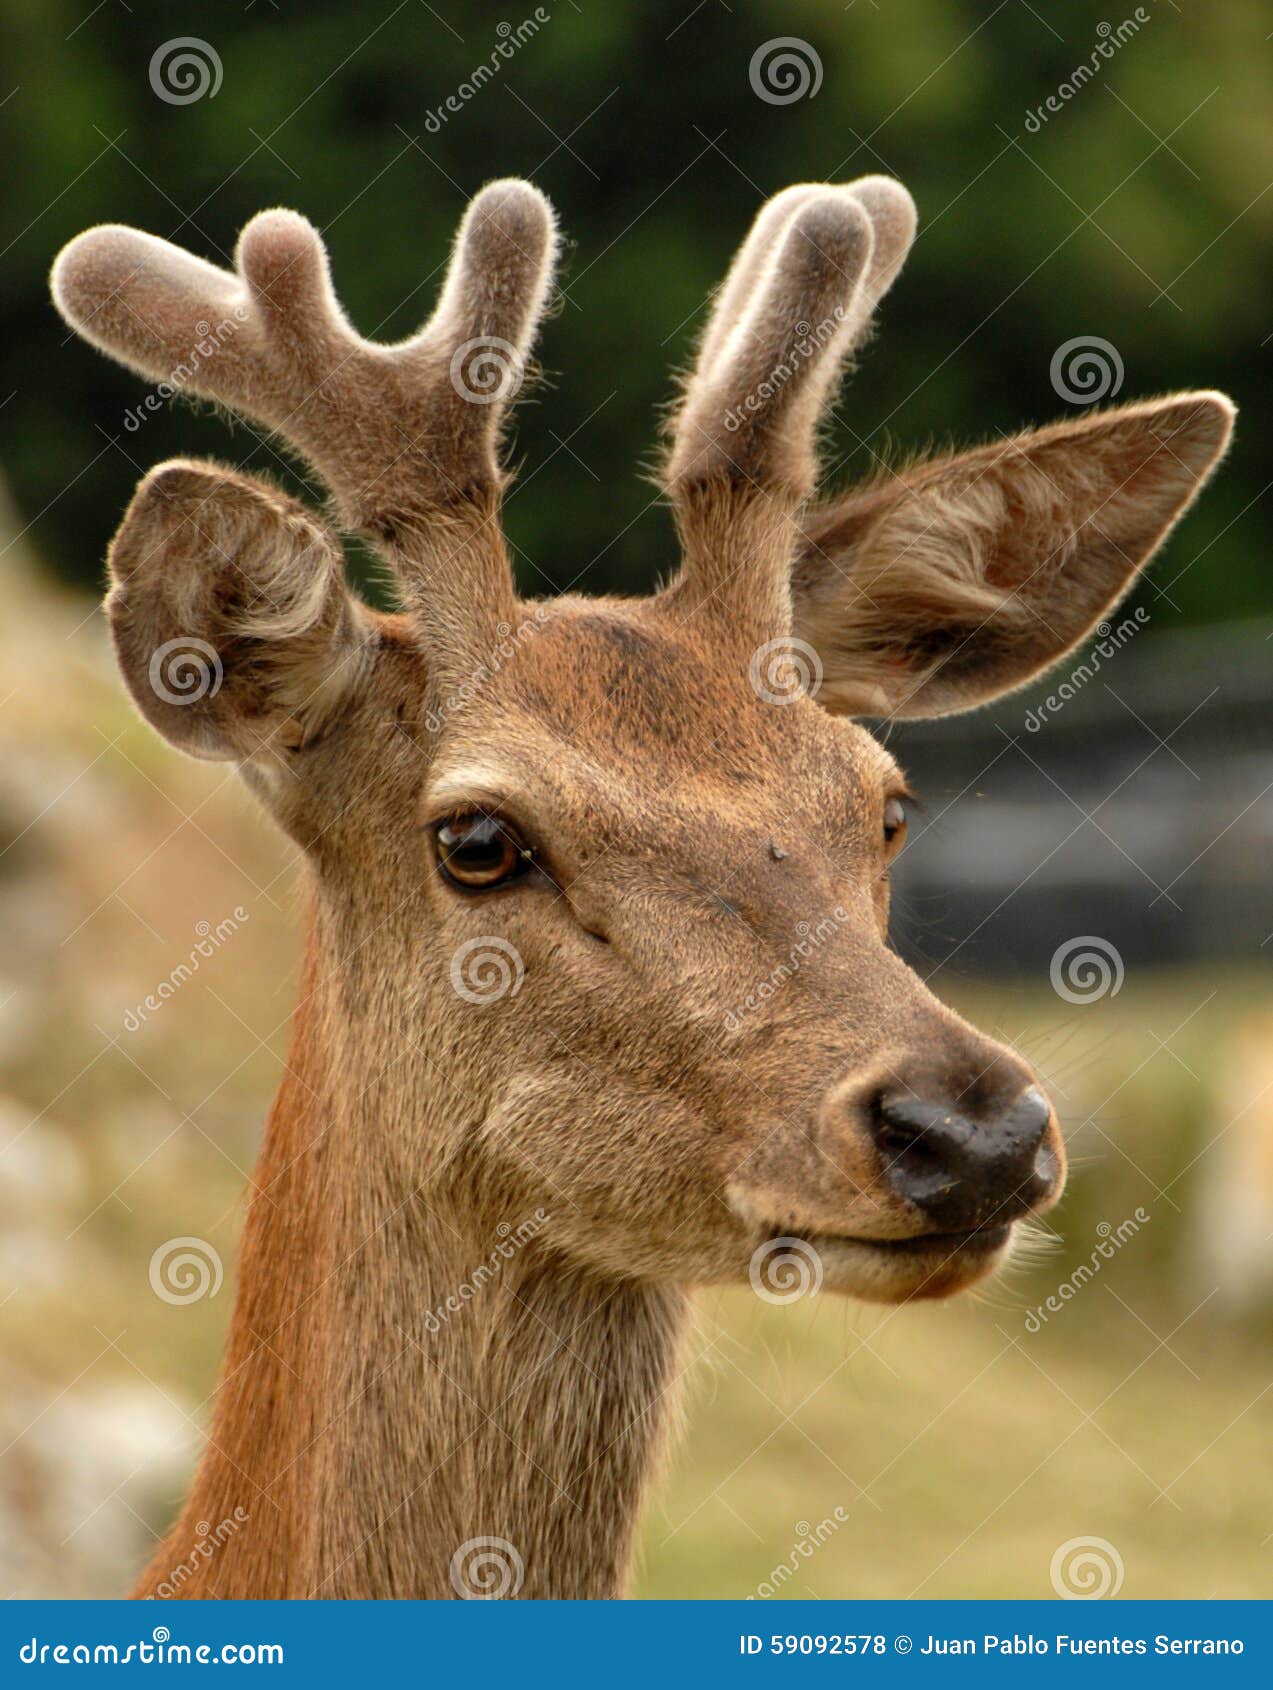 head of a deer in the field